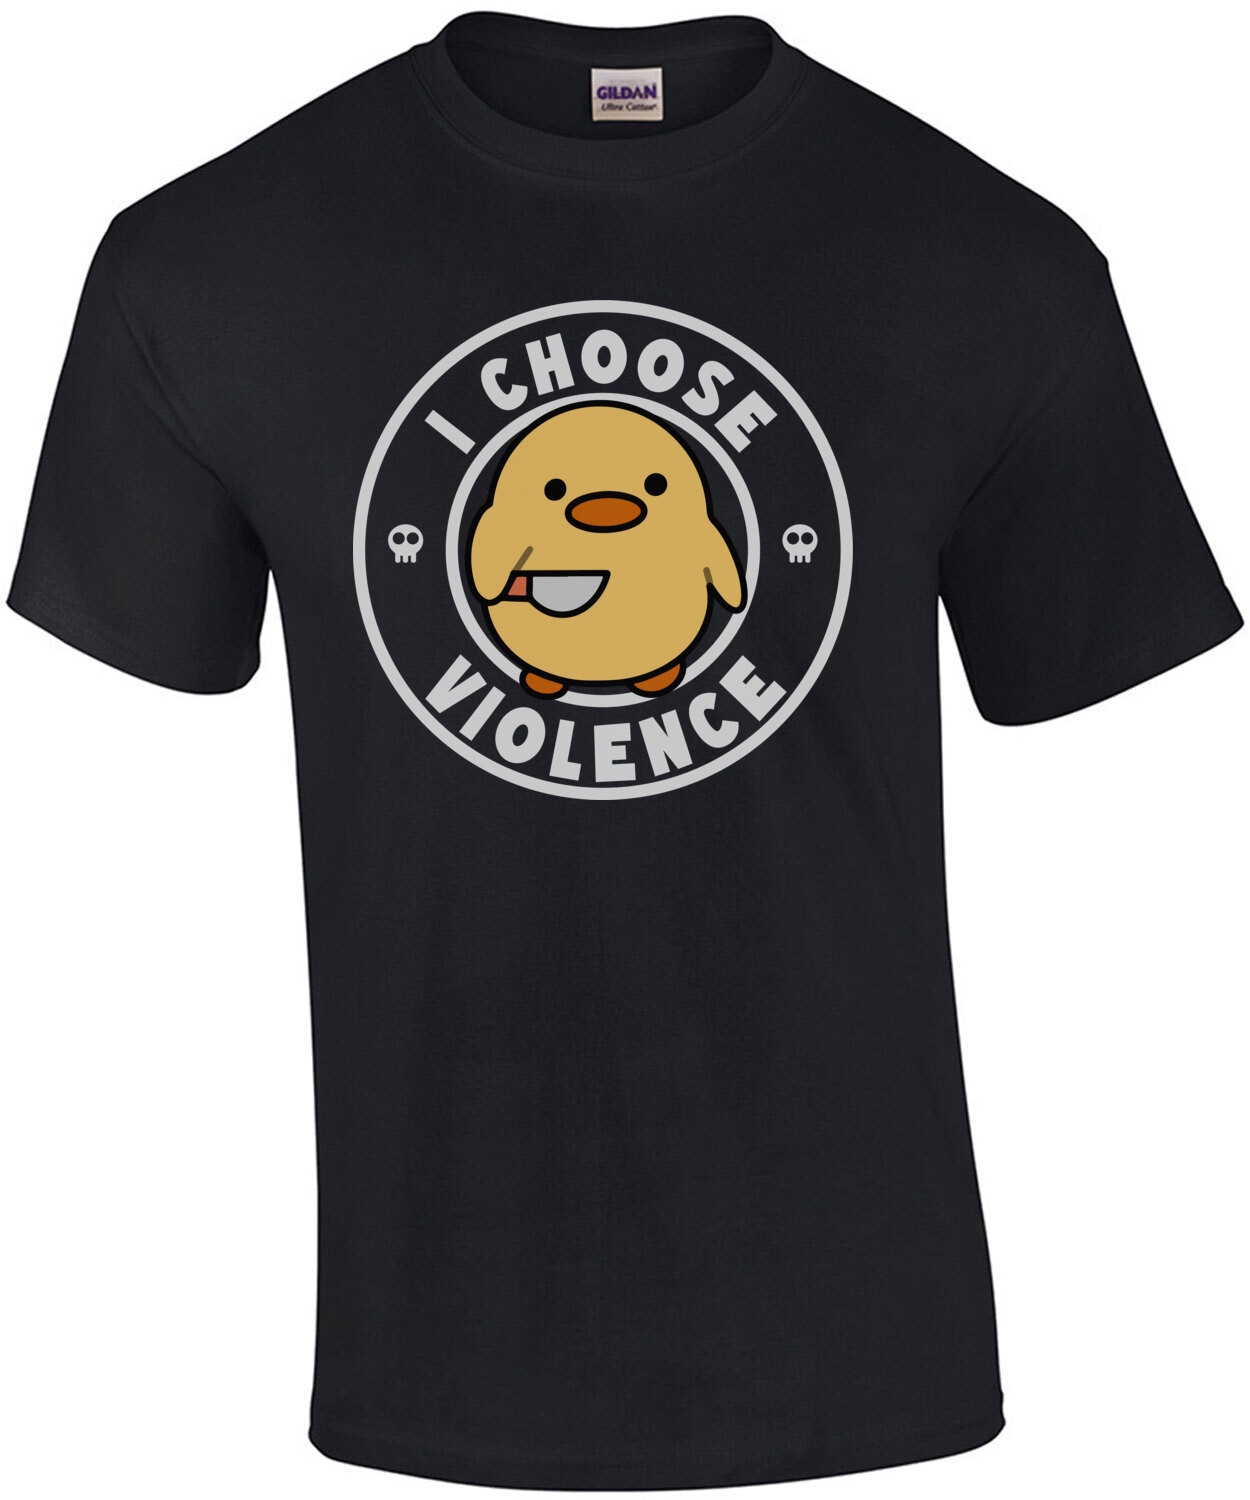 I choose violence - funny cute t-shirt